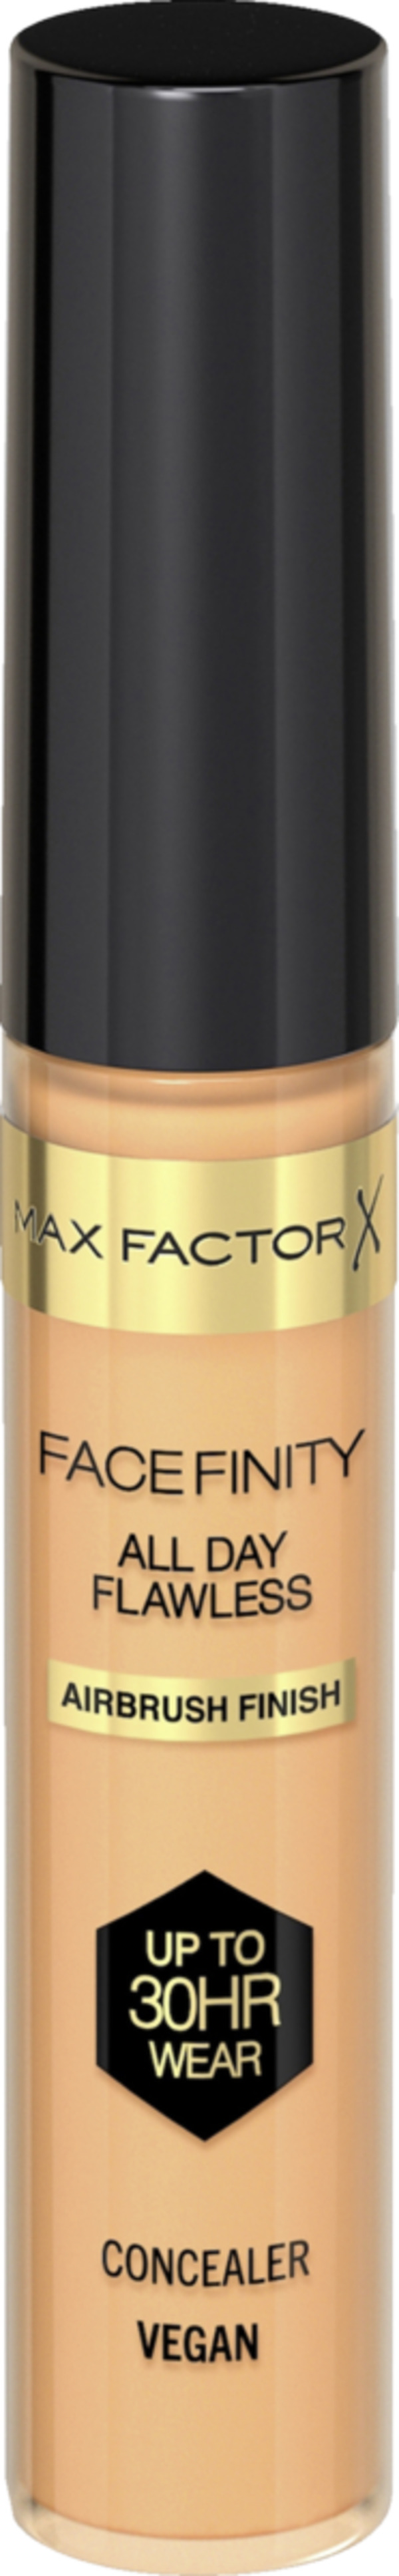 Bild 1 von Max Factor FaceFinity All Day Flawless Concealer 70